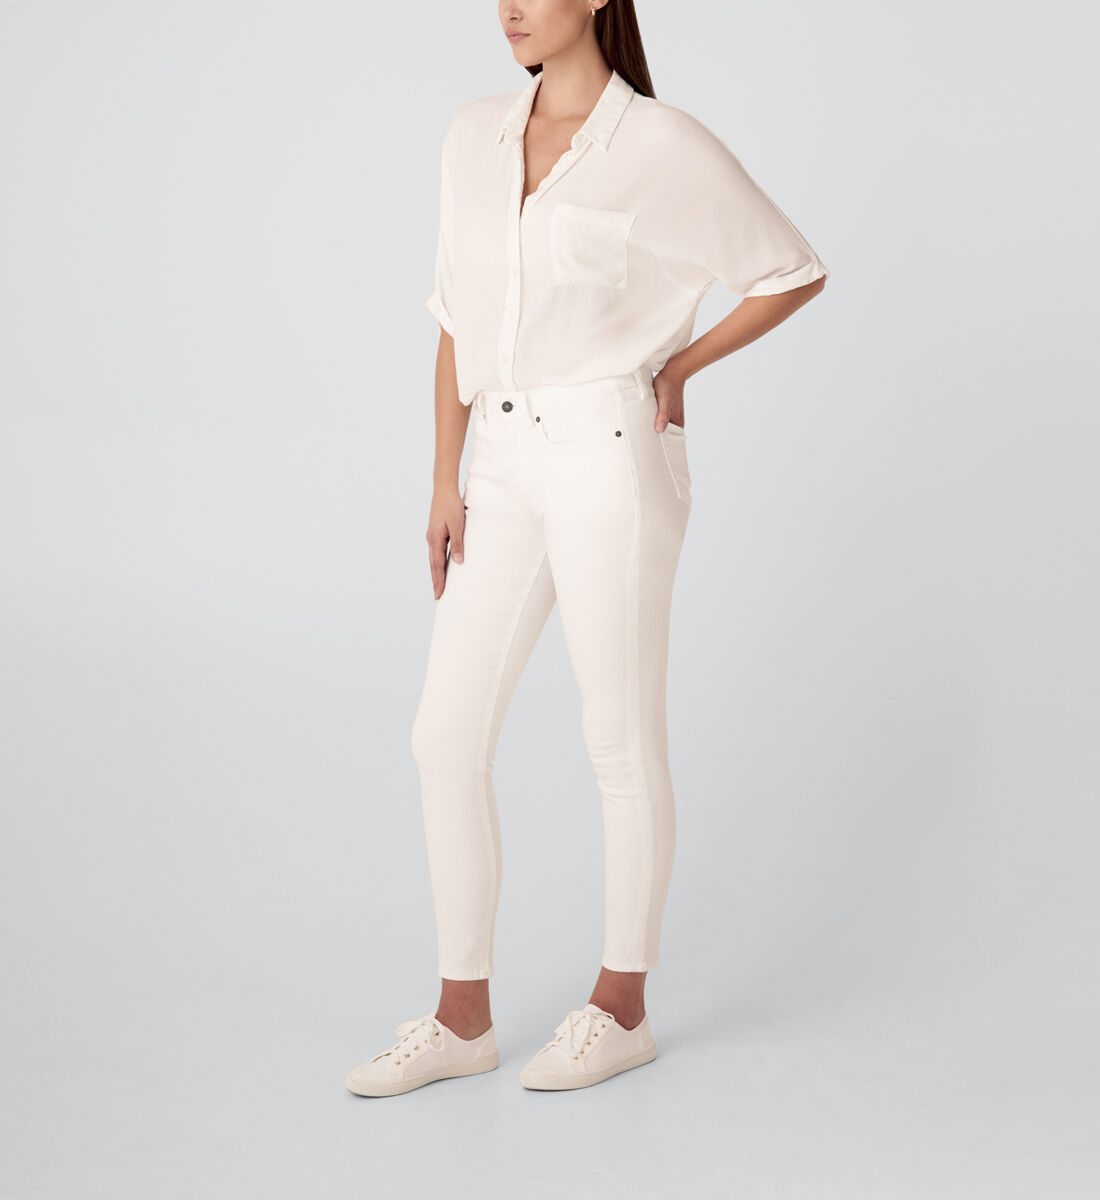 Suki Mid Rise Skinny Jeans,White Side